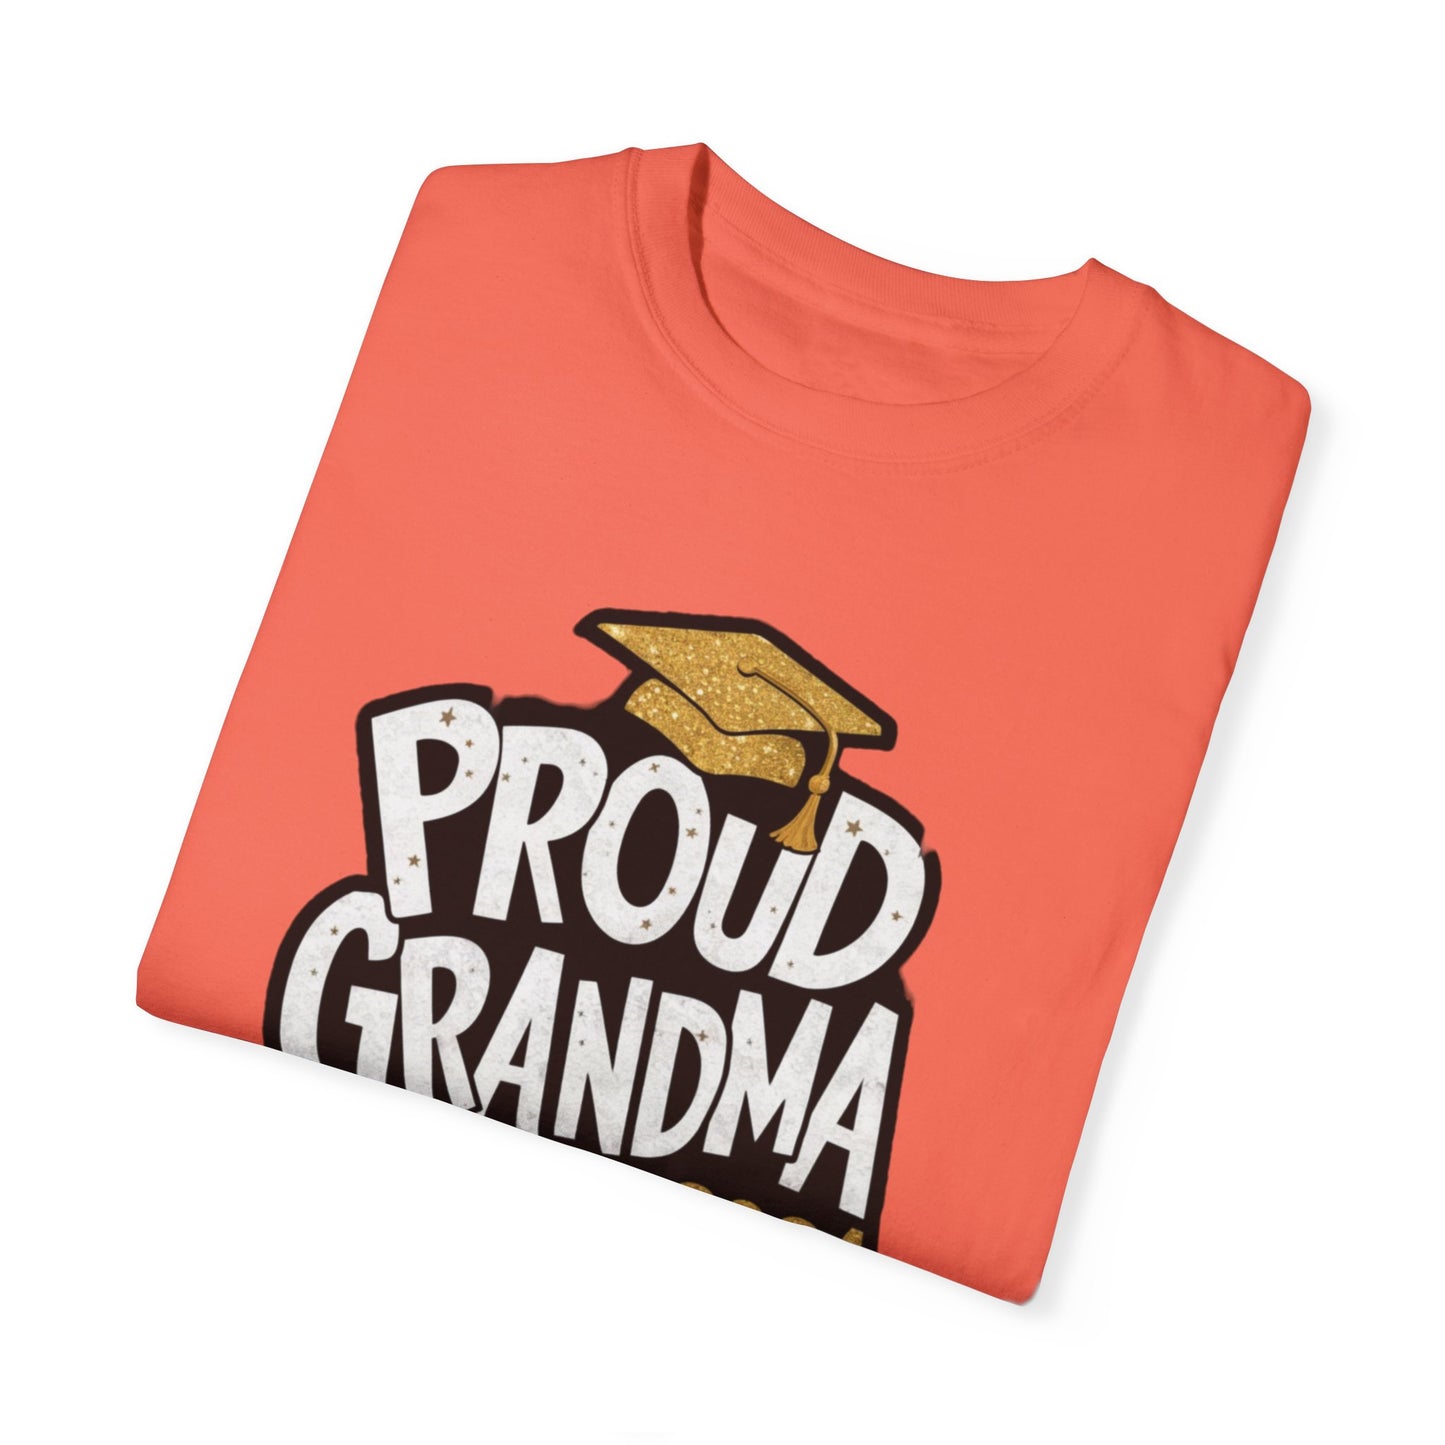 Proud of Grandma 2024 Graduate Unisex Garment-dyed T-shirt Cotton Funny Humorous Graphic Soft Premium Unisex Men Women Bright Salmon T-shirt Birthday Gift-32